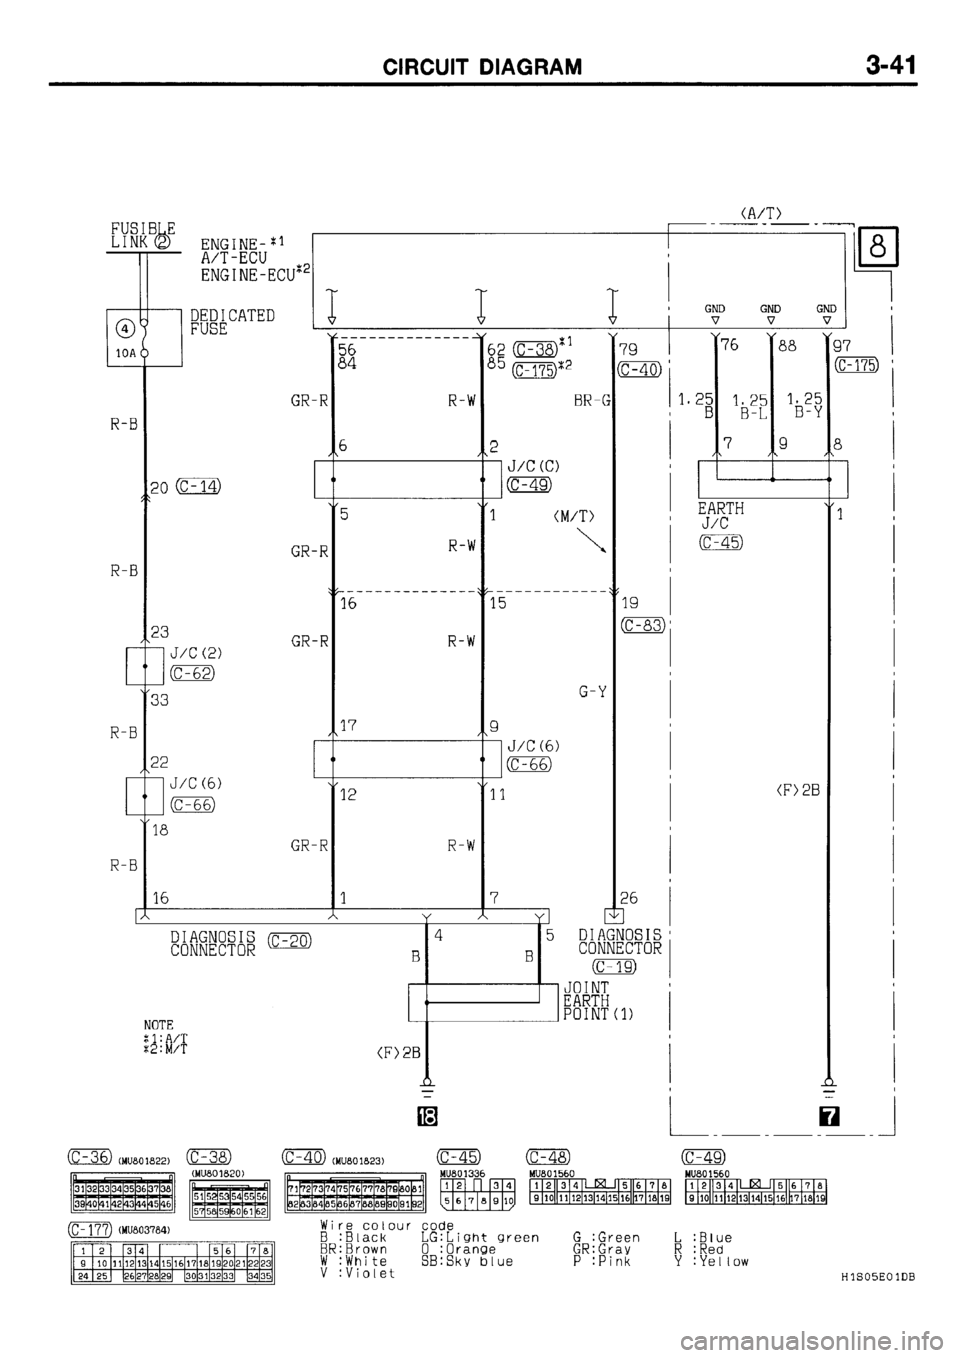 2001 Mitsubishi Galant Wiring Diagram : Mitsubishi Galant 2001 8 G